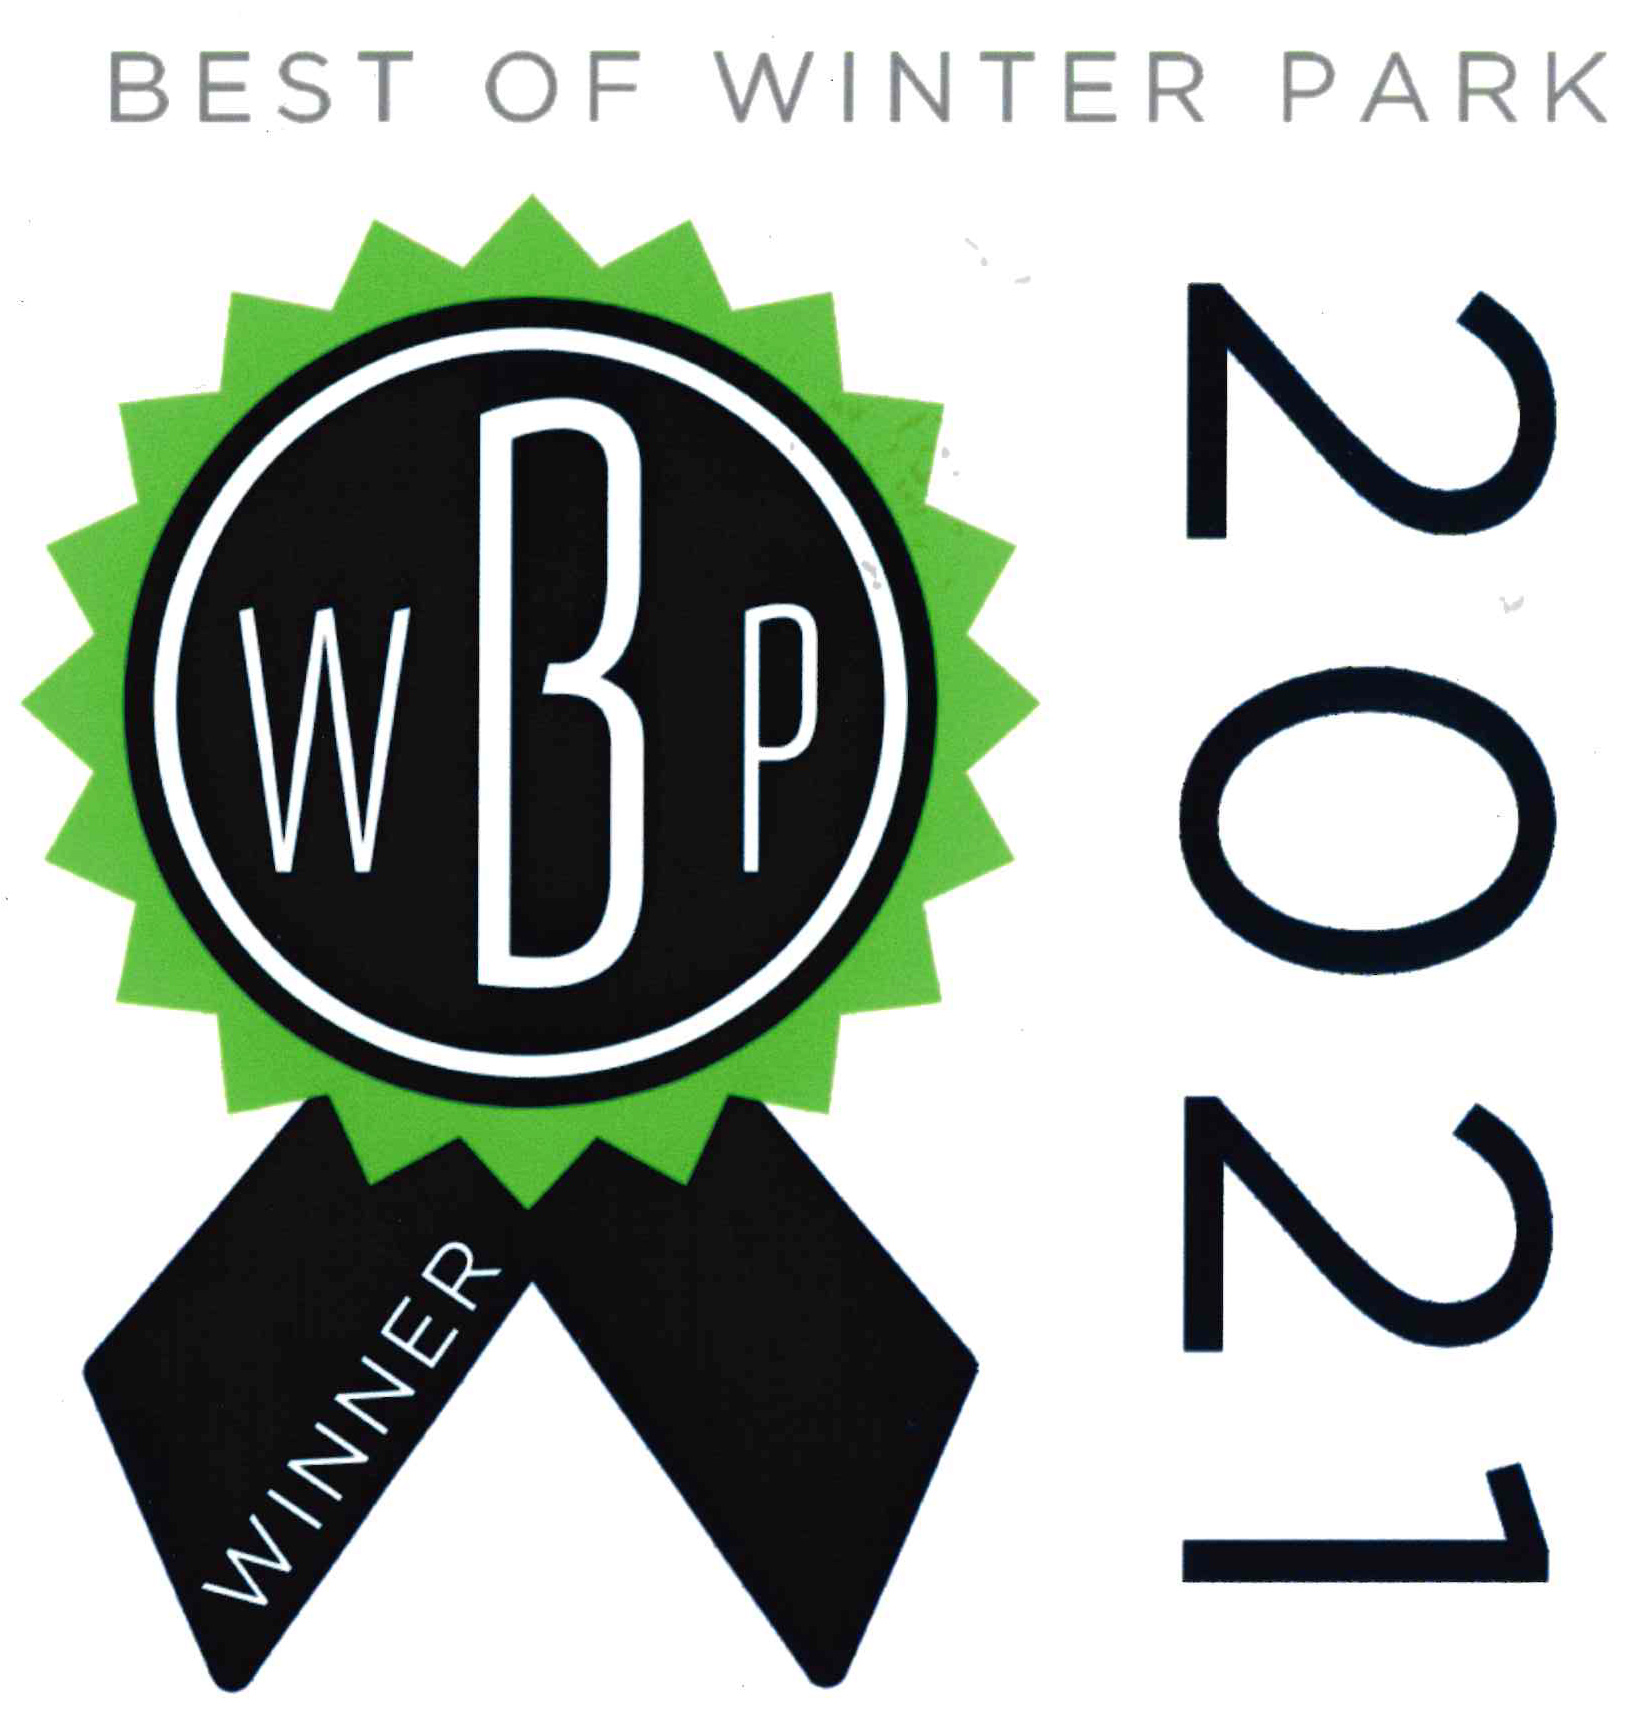 Best of Winter Park logo 2021